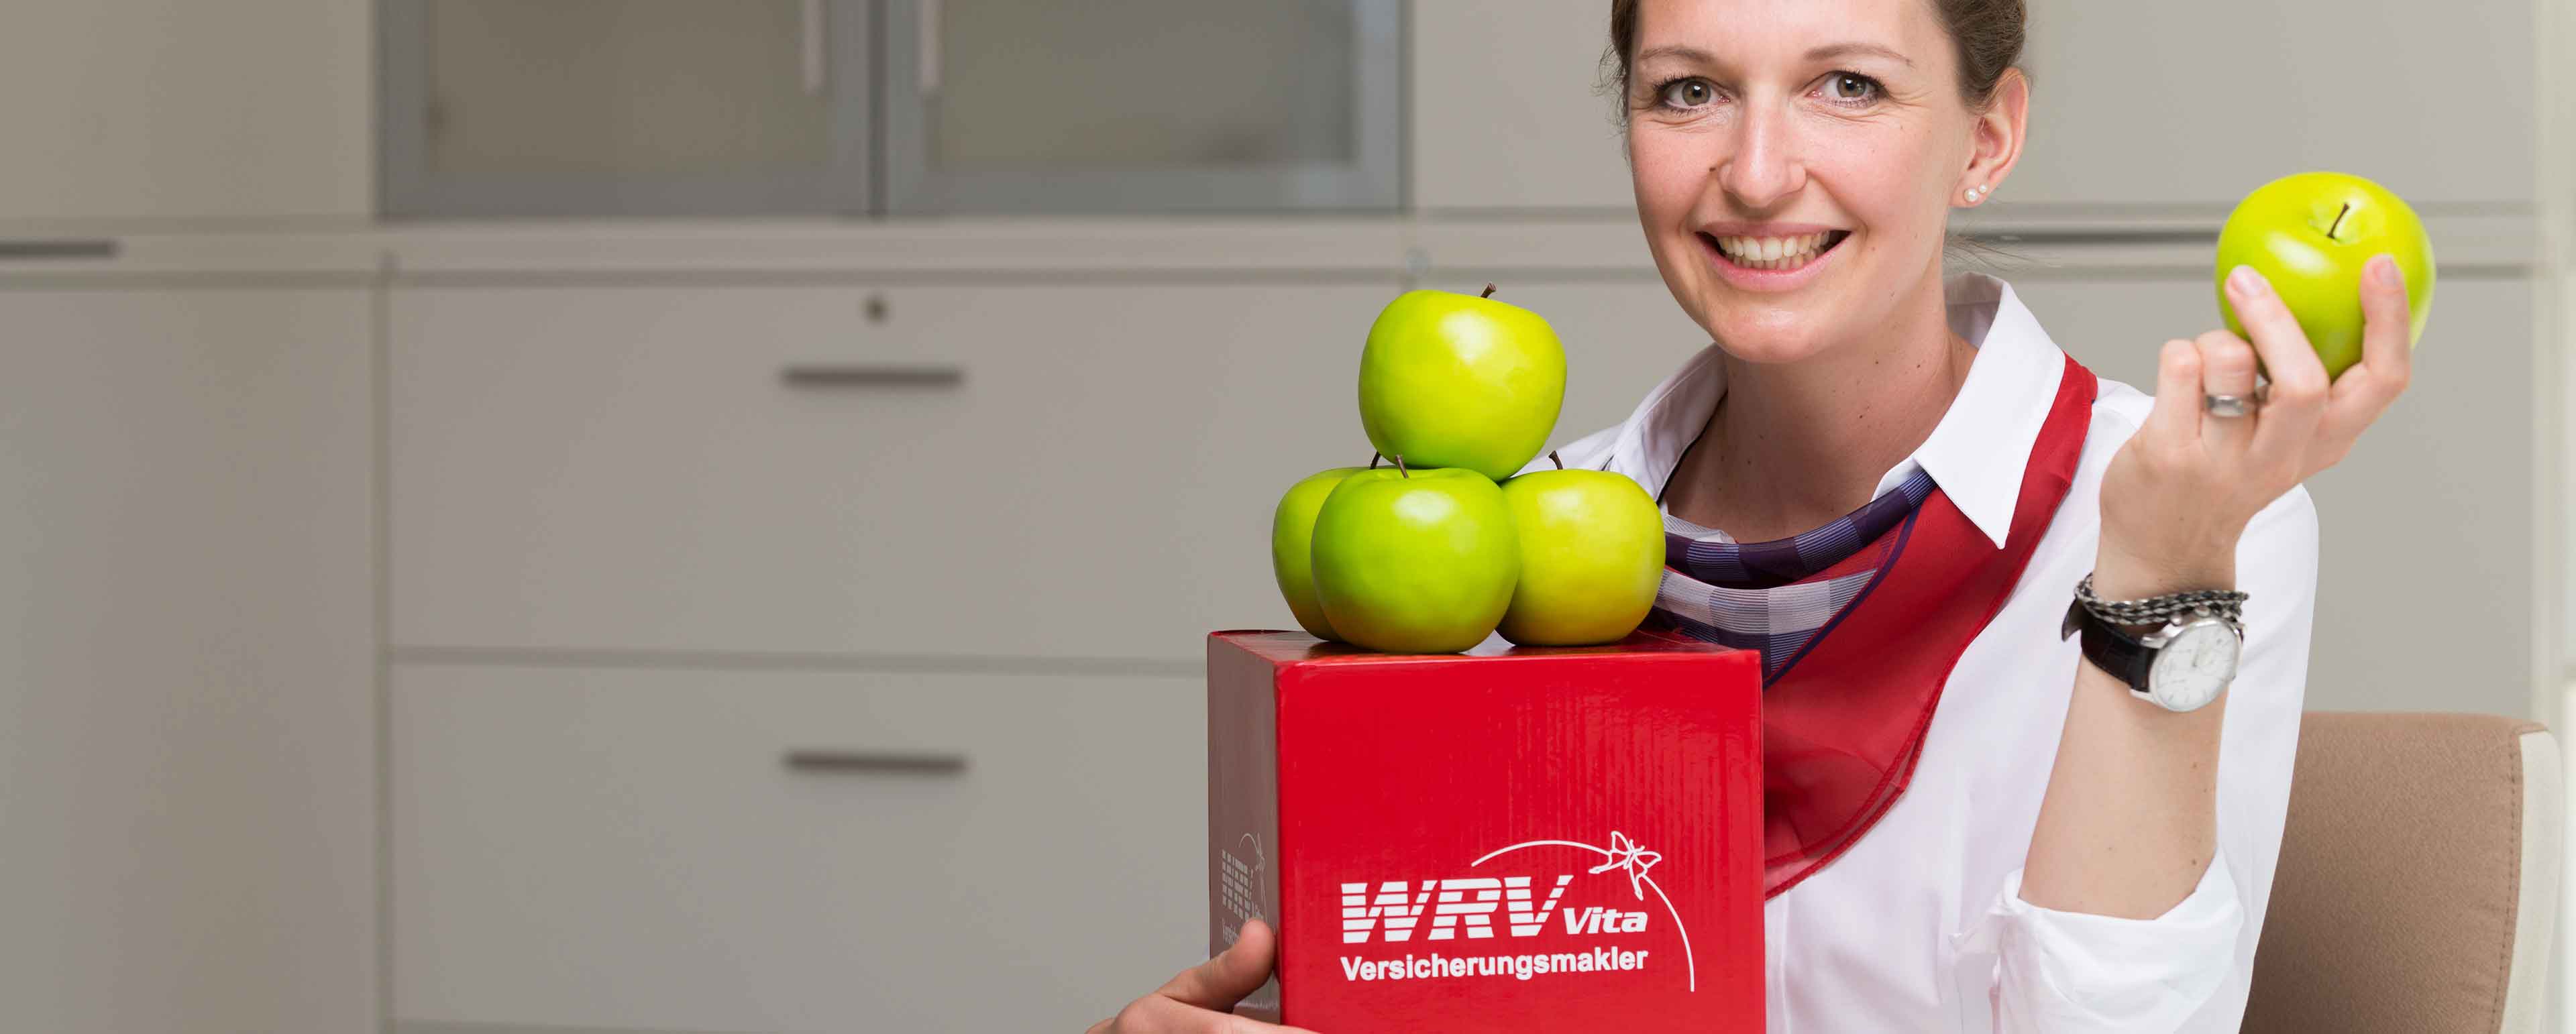 Tina Salovic, Geschäftsführerin WRV GmbH, WRV-Vita GmbH